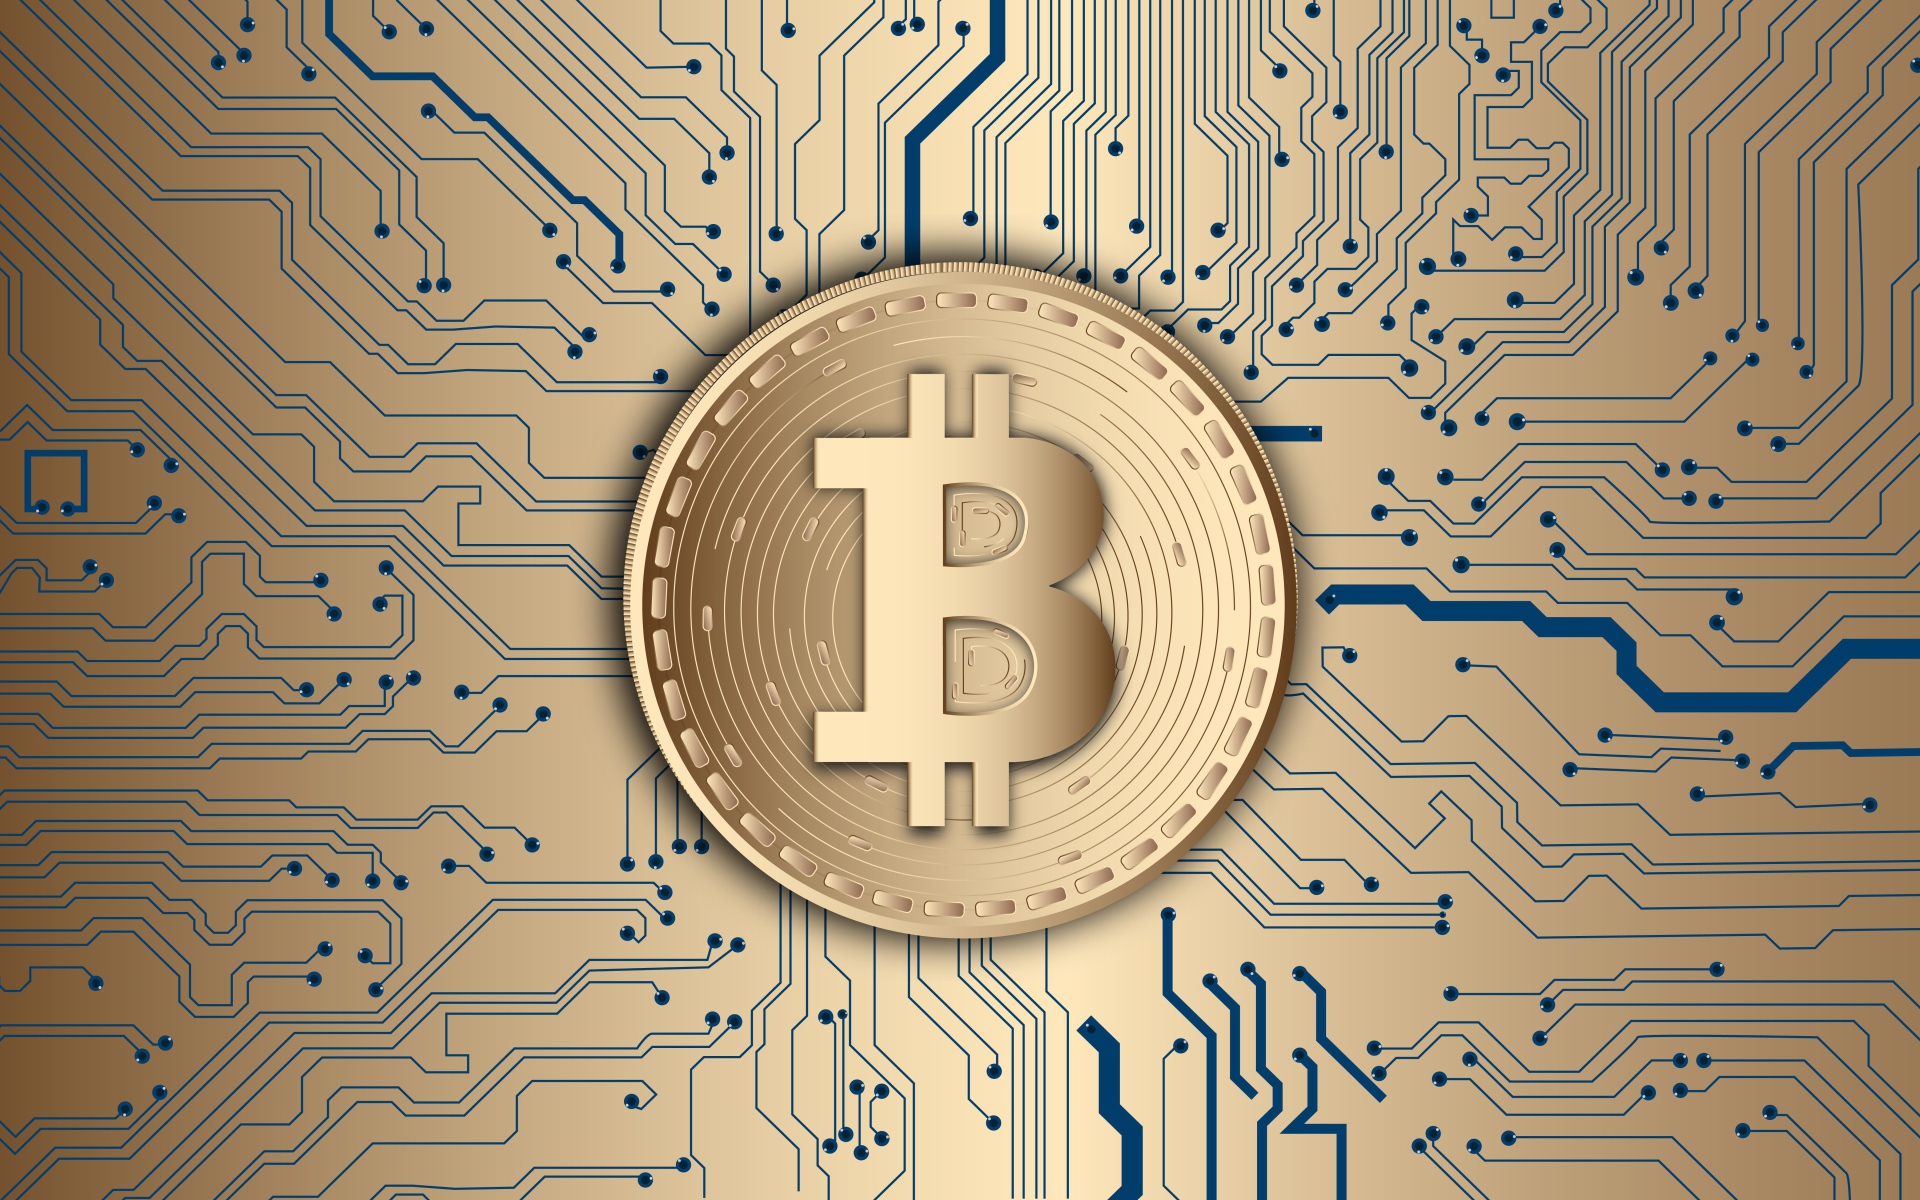 Coin bitcoin on an electronic board